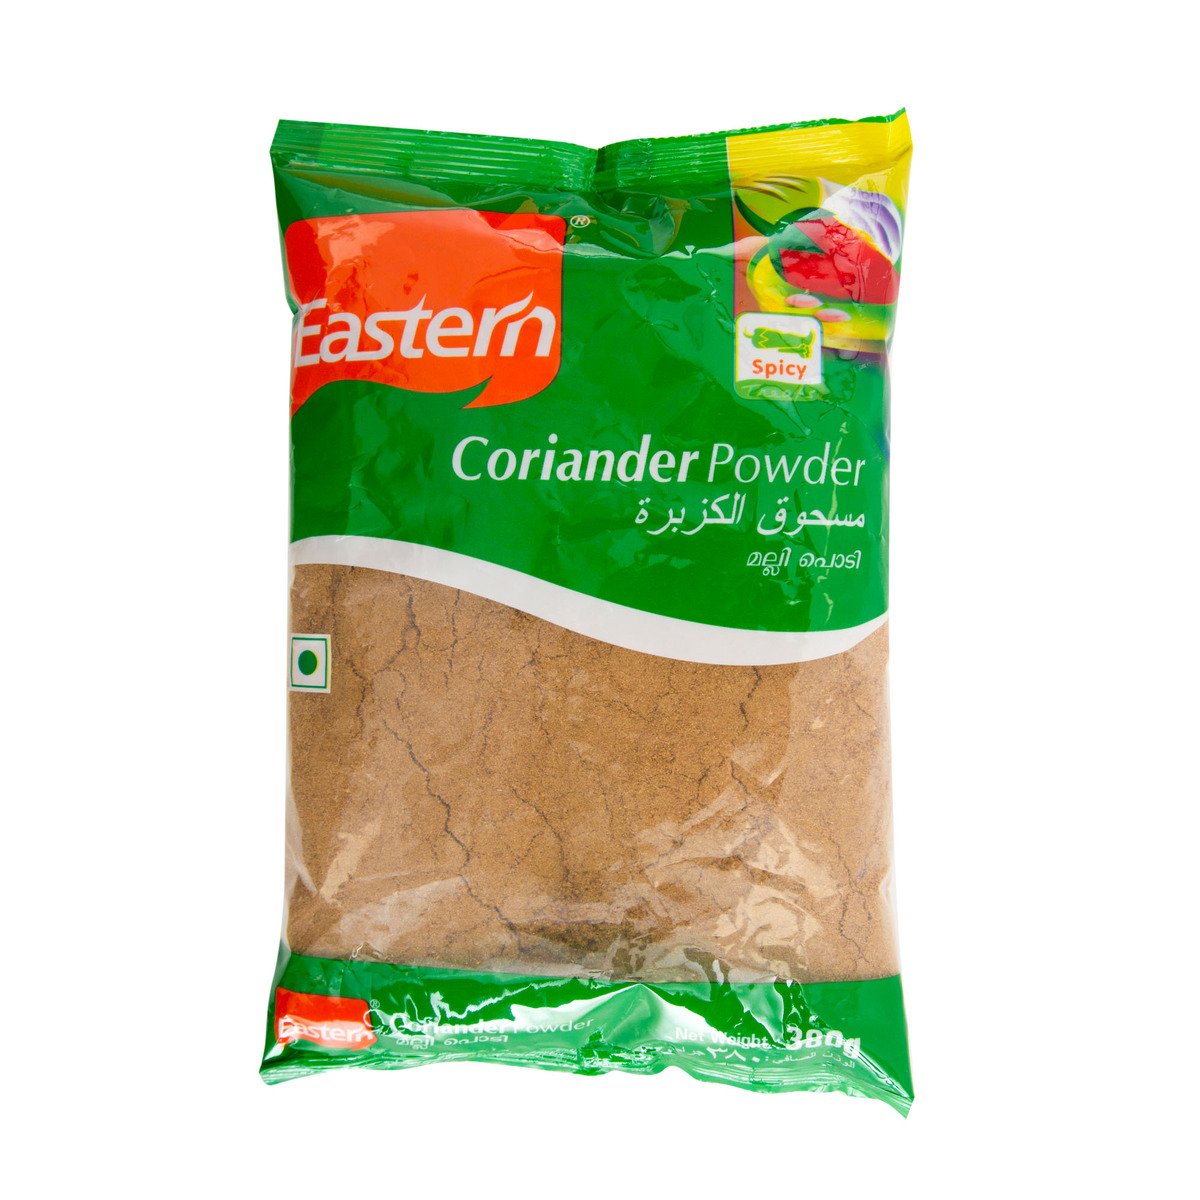 Eastern Coriander Powder 380 g